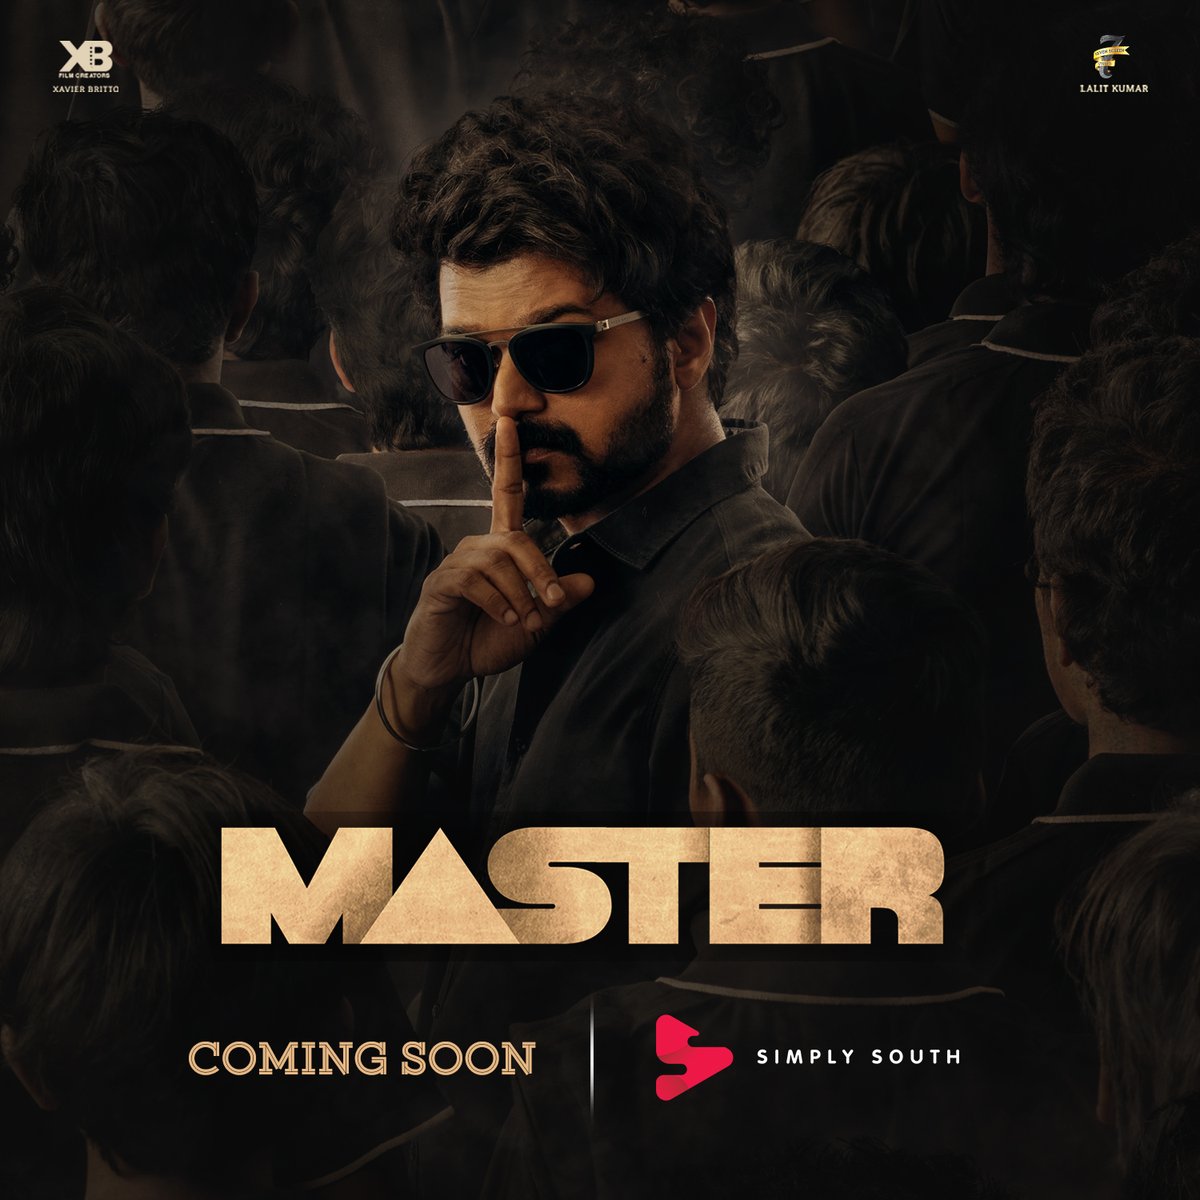 Upcoming release on Simply South: #ThalapathyVijay's #Master

@actorvijay @VijaySethuOffl @MalavikaM_ @Dir_Lokesh @anirudhofficial @iam_arjundas @andrea_jeremiah @imKBRshanthnu 

#IdhuVeraLevelEntertainment #SayNoToPiracy #MasterFilm #MasterPongal #MasterOnSimplySouth